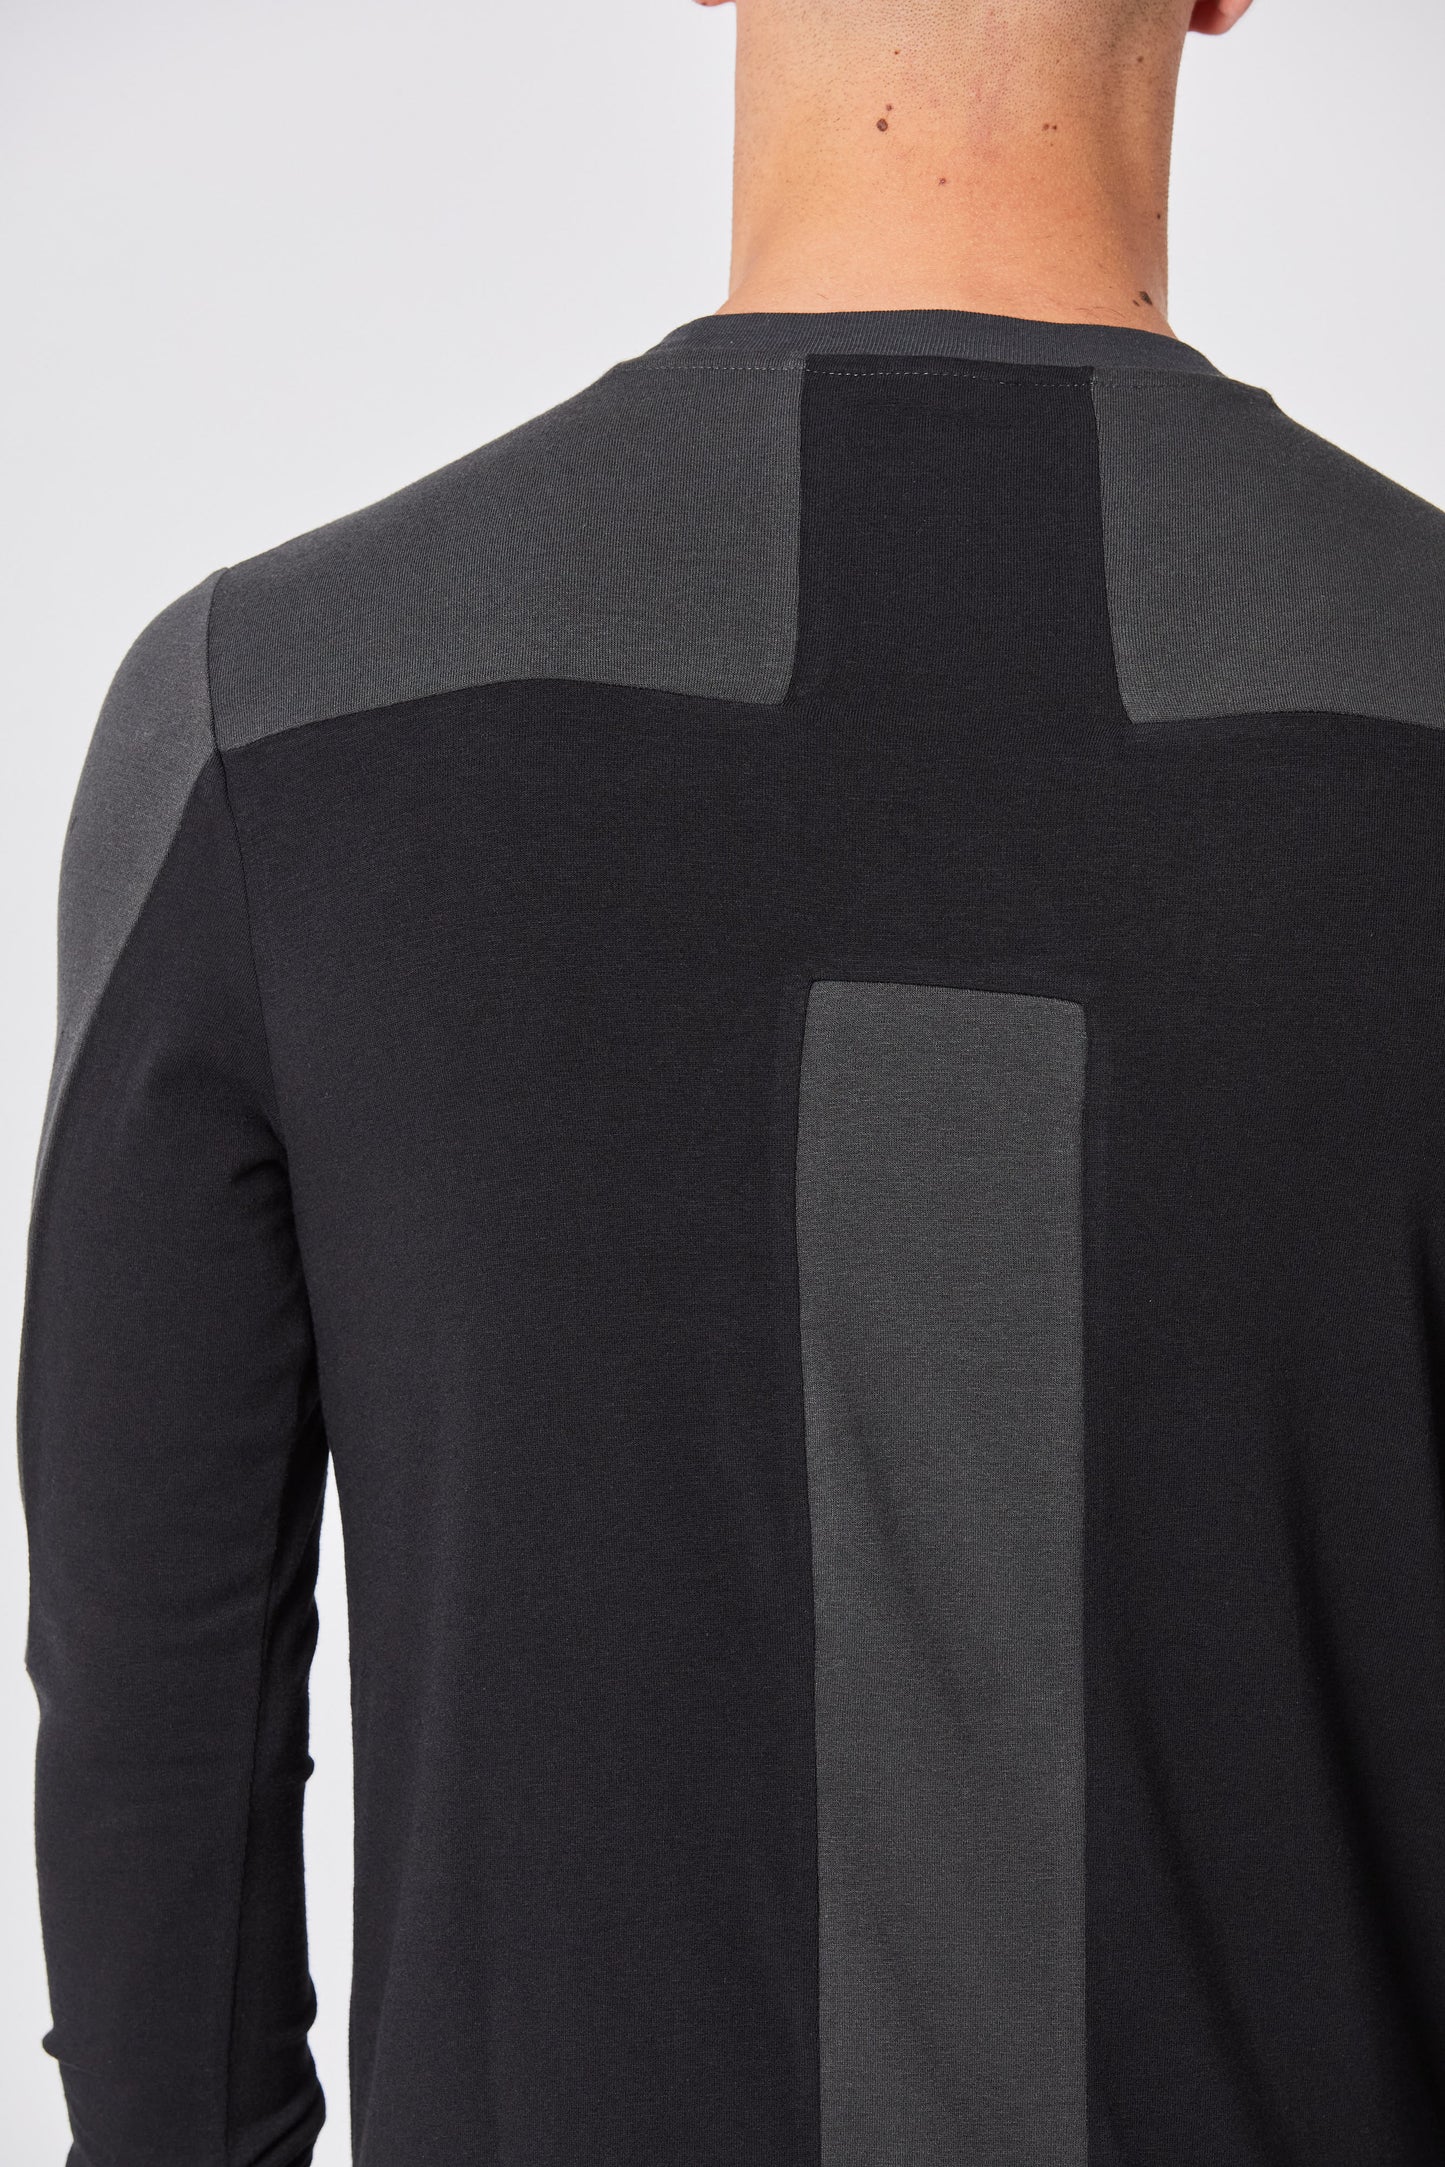 Black and Grey Panel Cotton Modal Long Sleeve T-shirt MTS 723